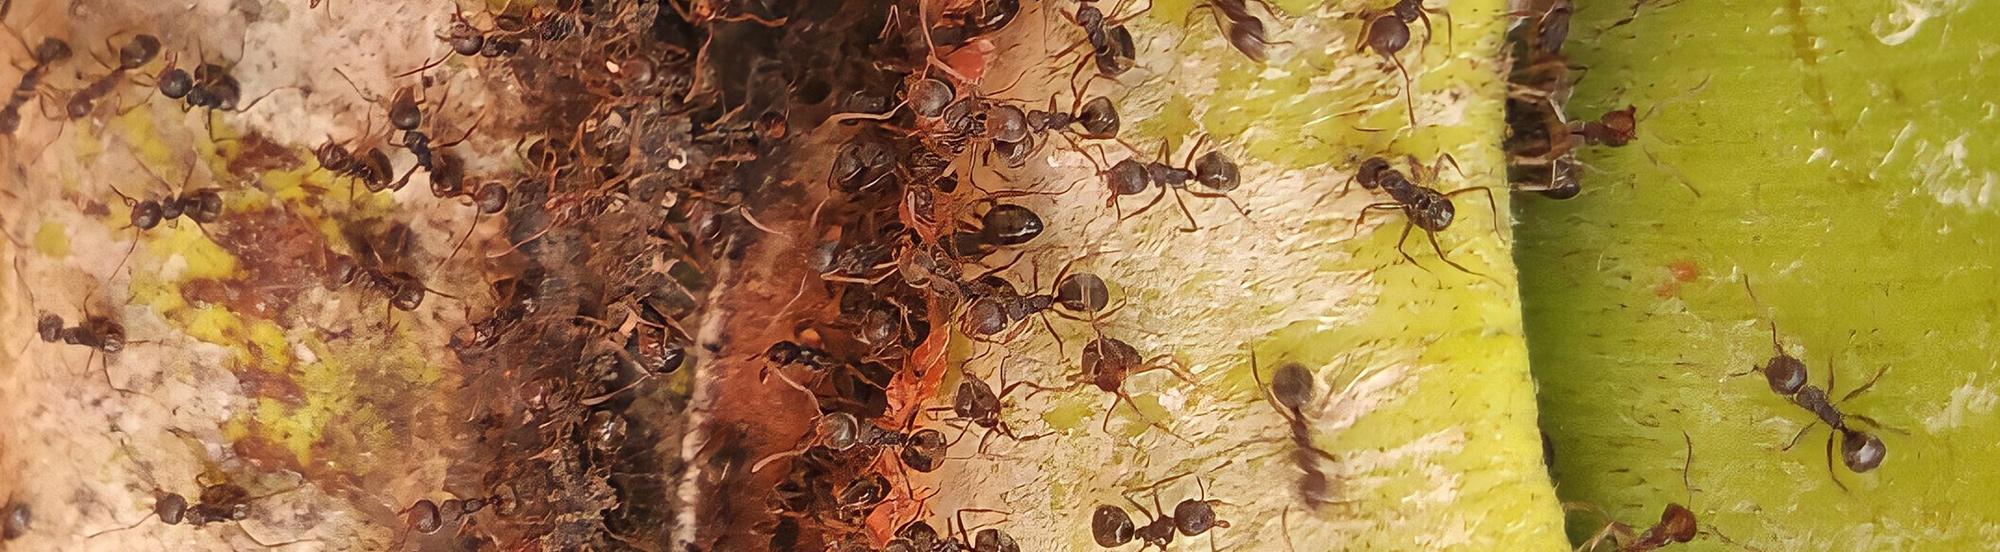 little black ants foraging for food